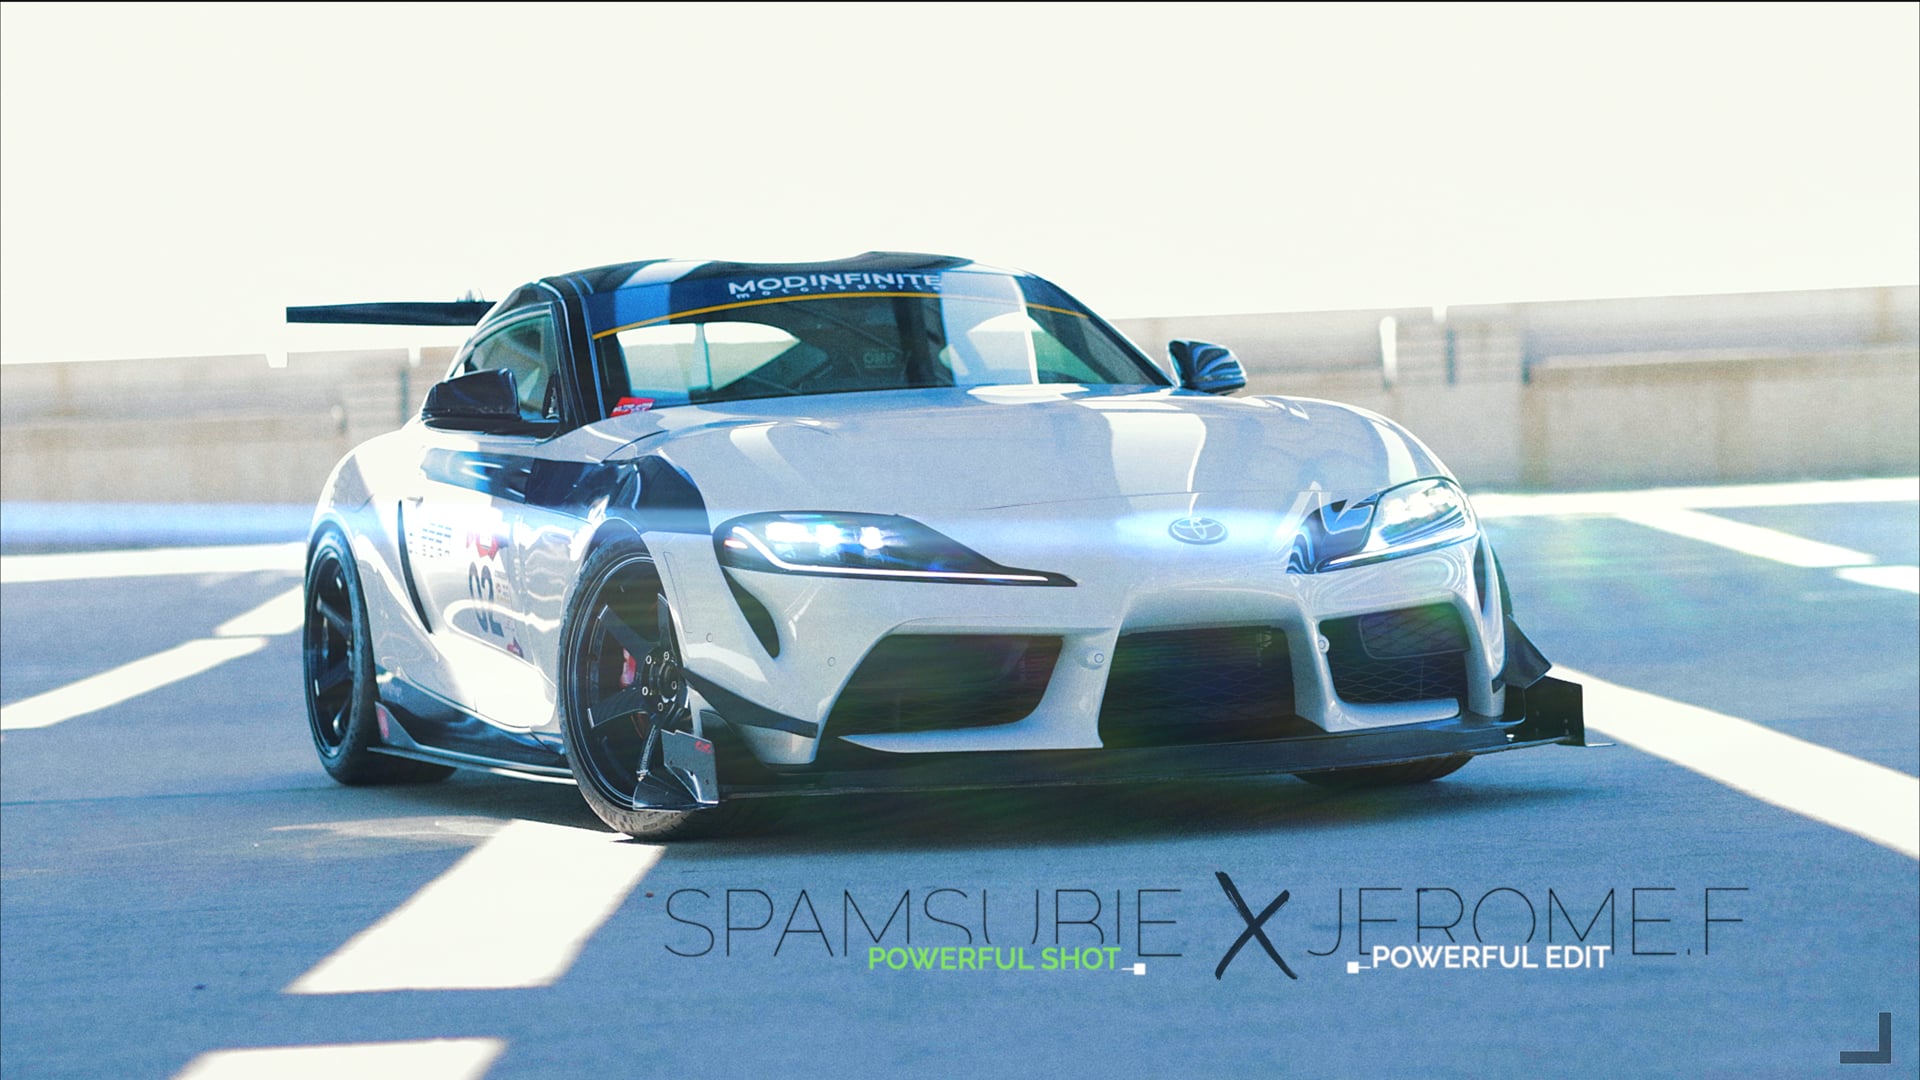 SPAMSUBIE X JEROME FROISSARD | Toyota SUPRA | Editing Contest